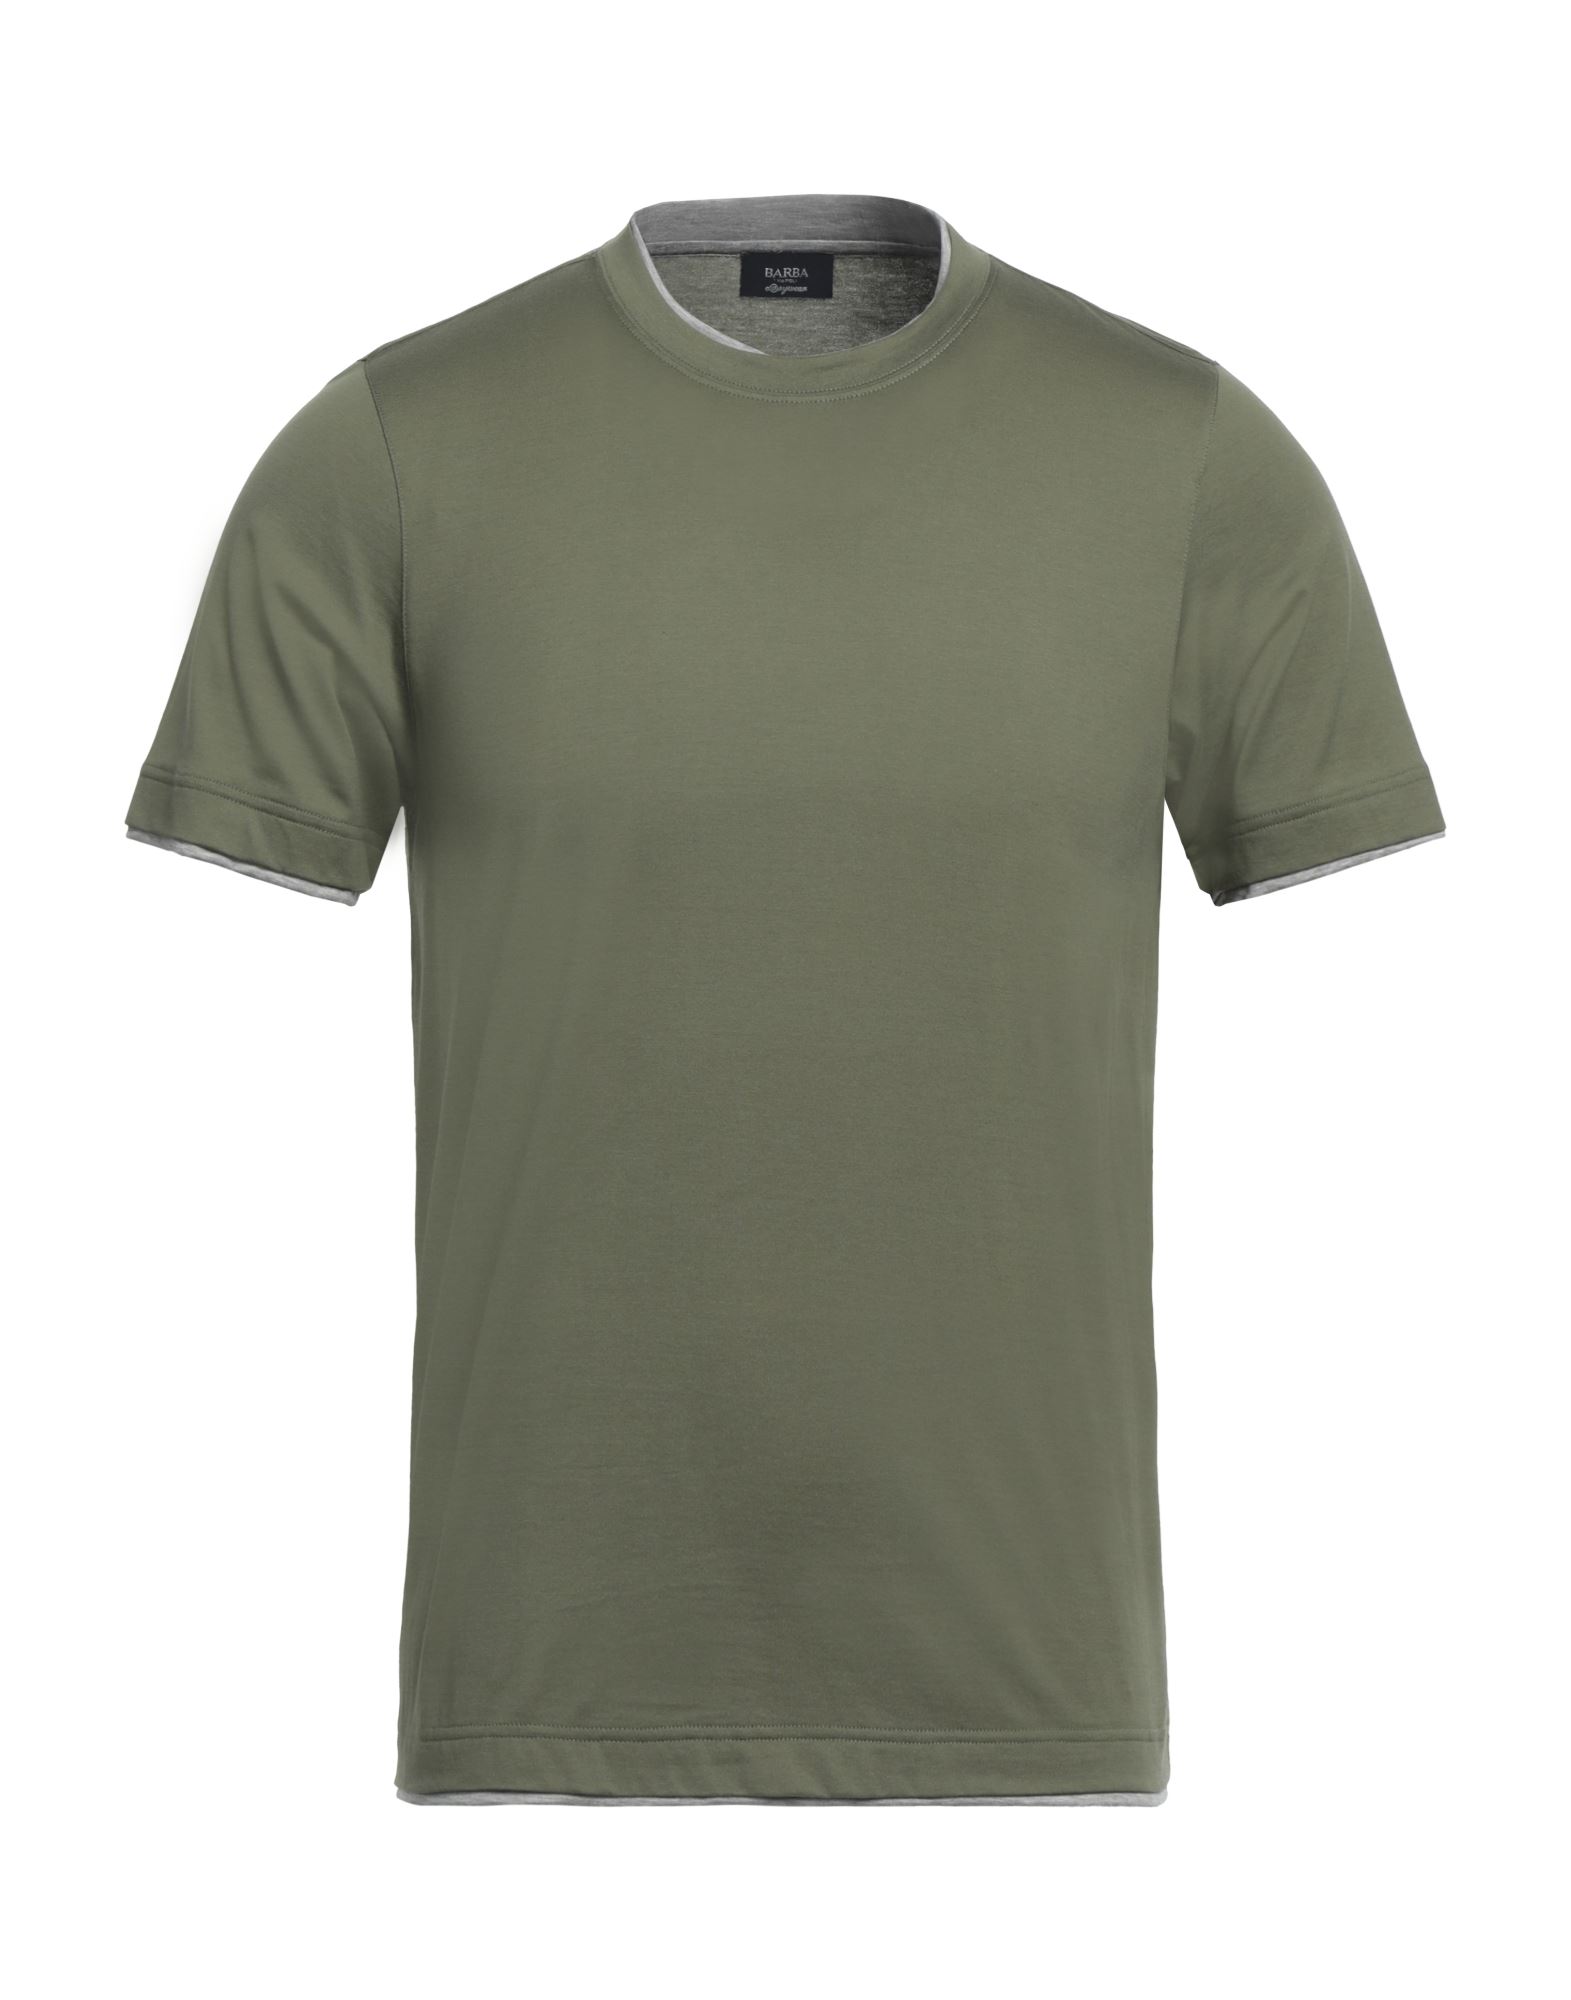 BARBA Napoli T-shirts Herren Militärgrün von BARBA Napoli